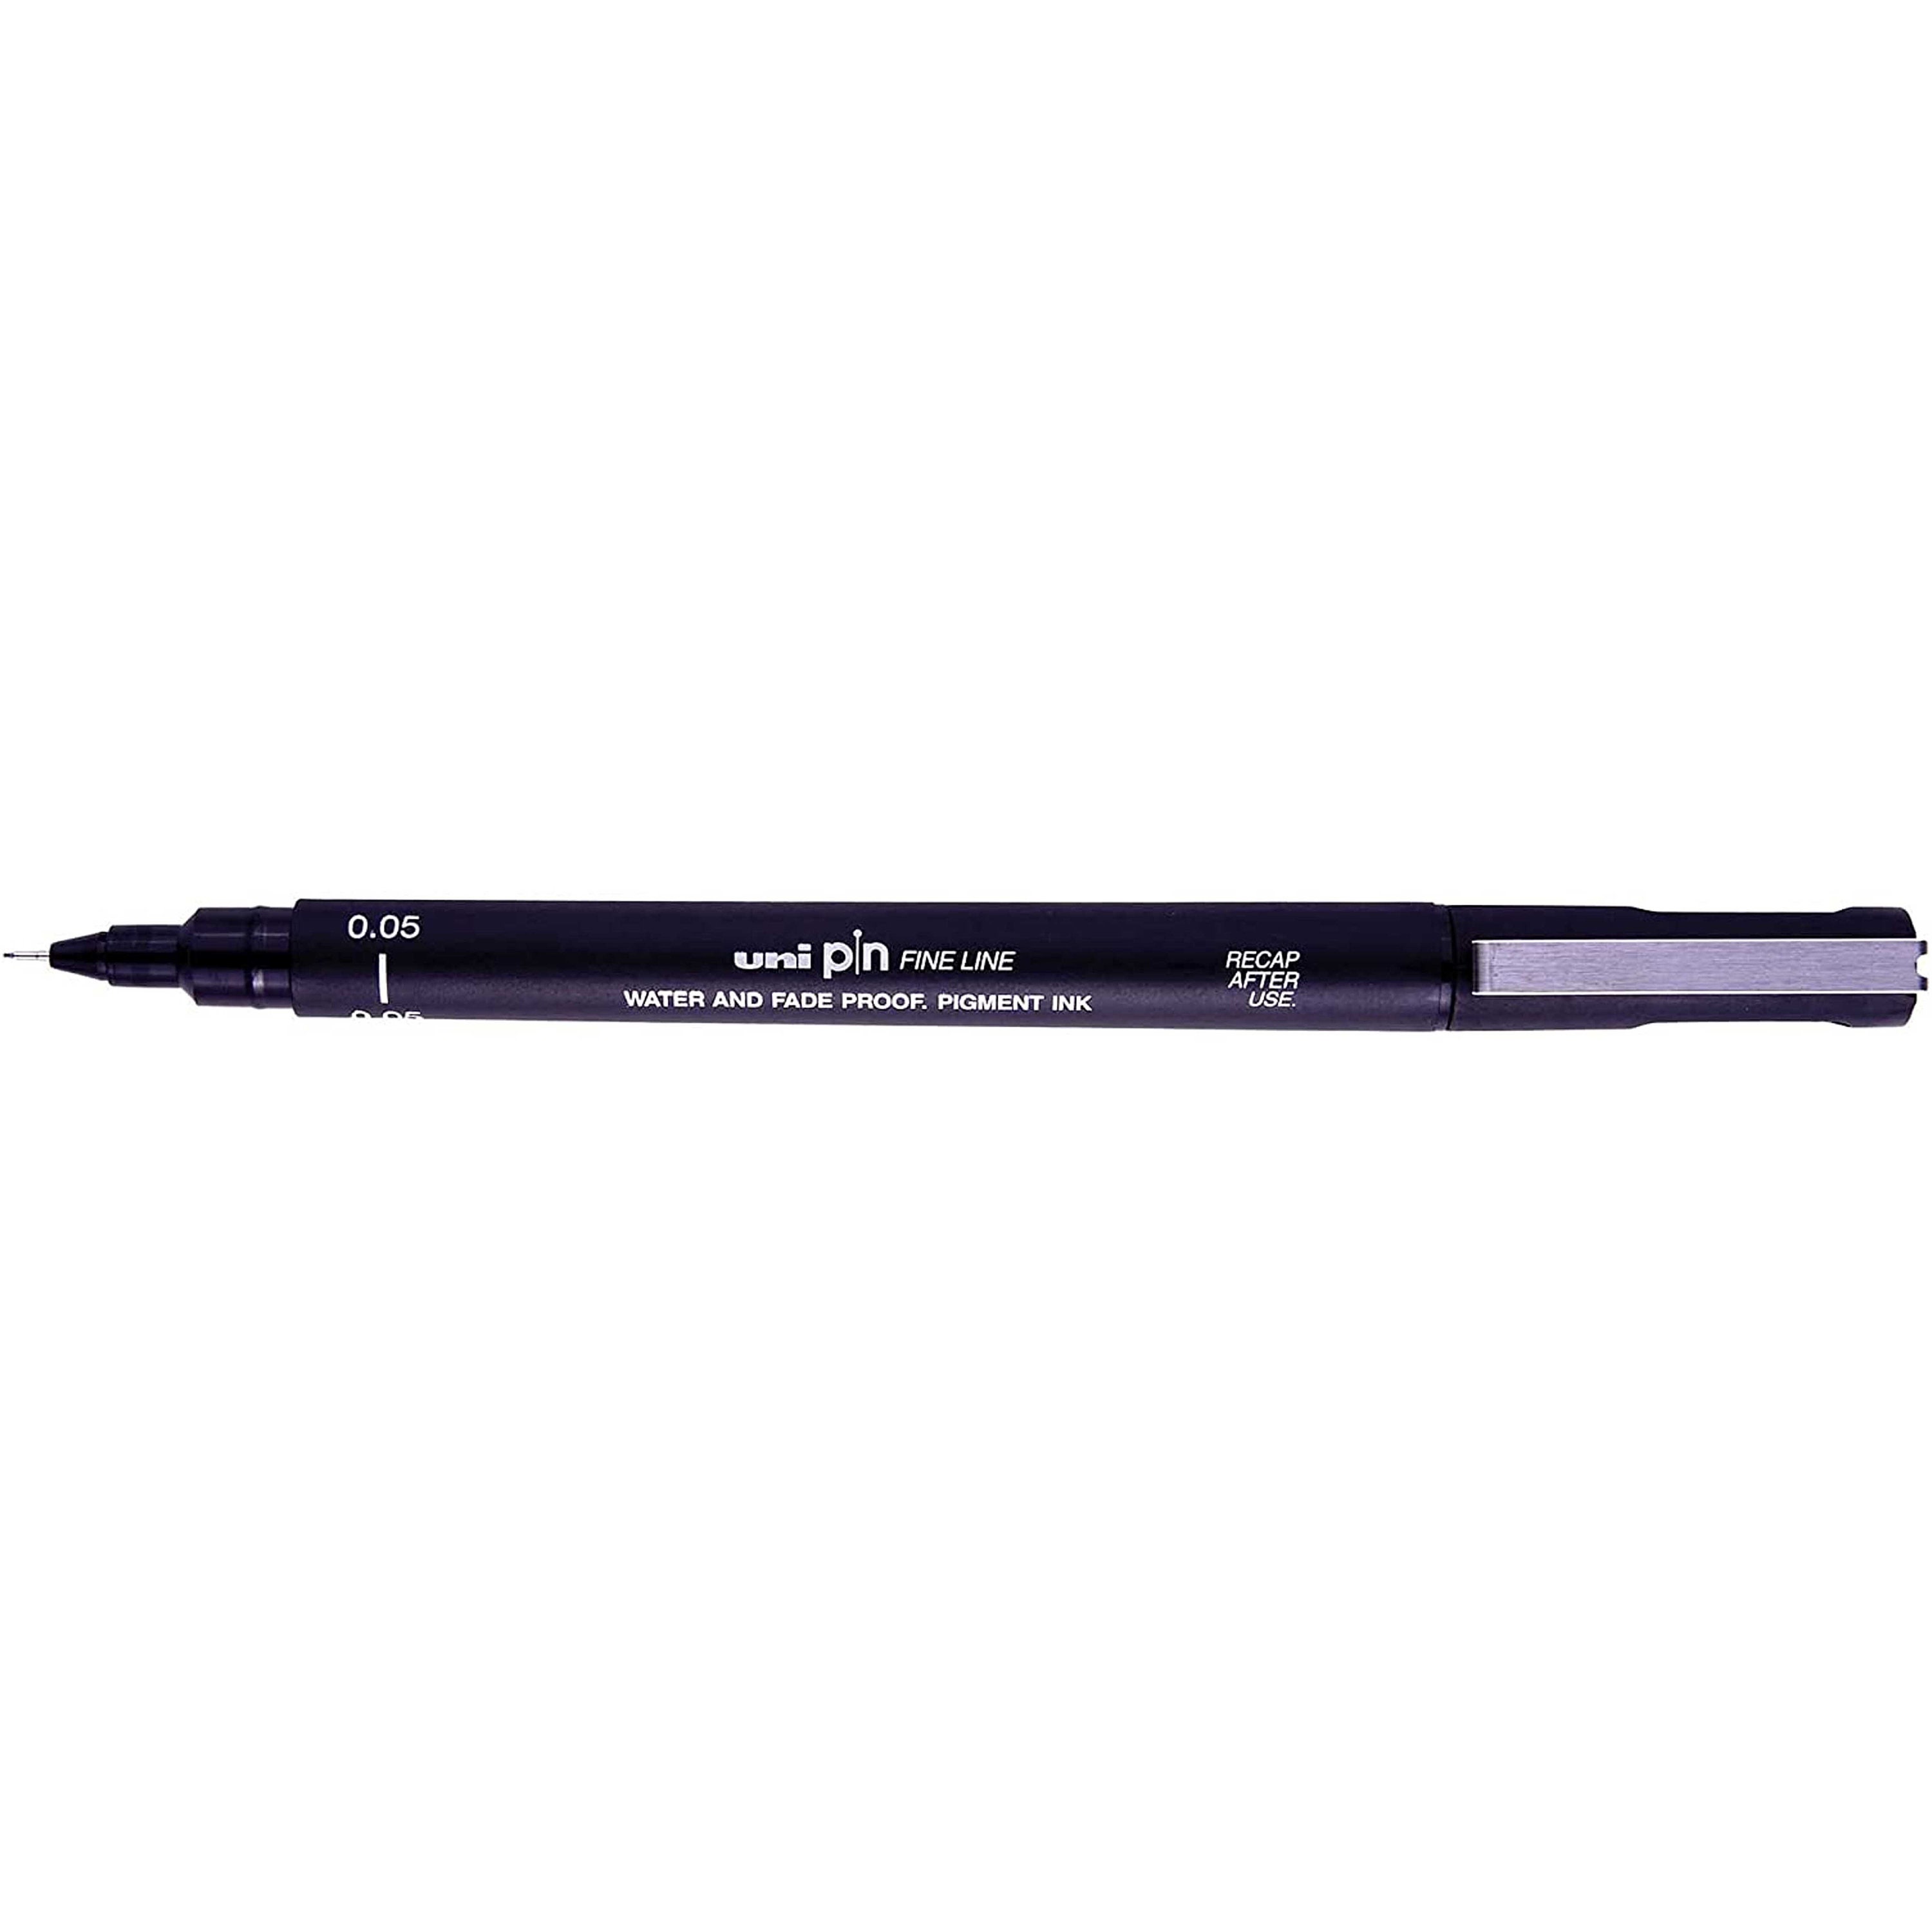 Uni Pin Fineliner Drawing Pen Black 0.03mm Pack of 3 -  Israel